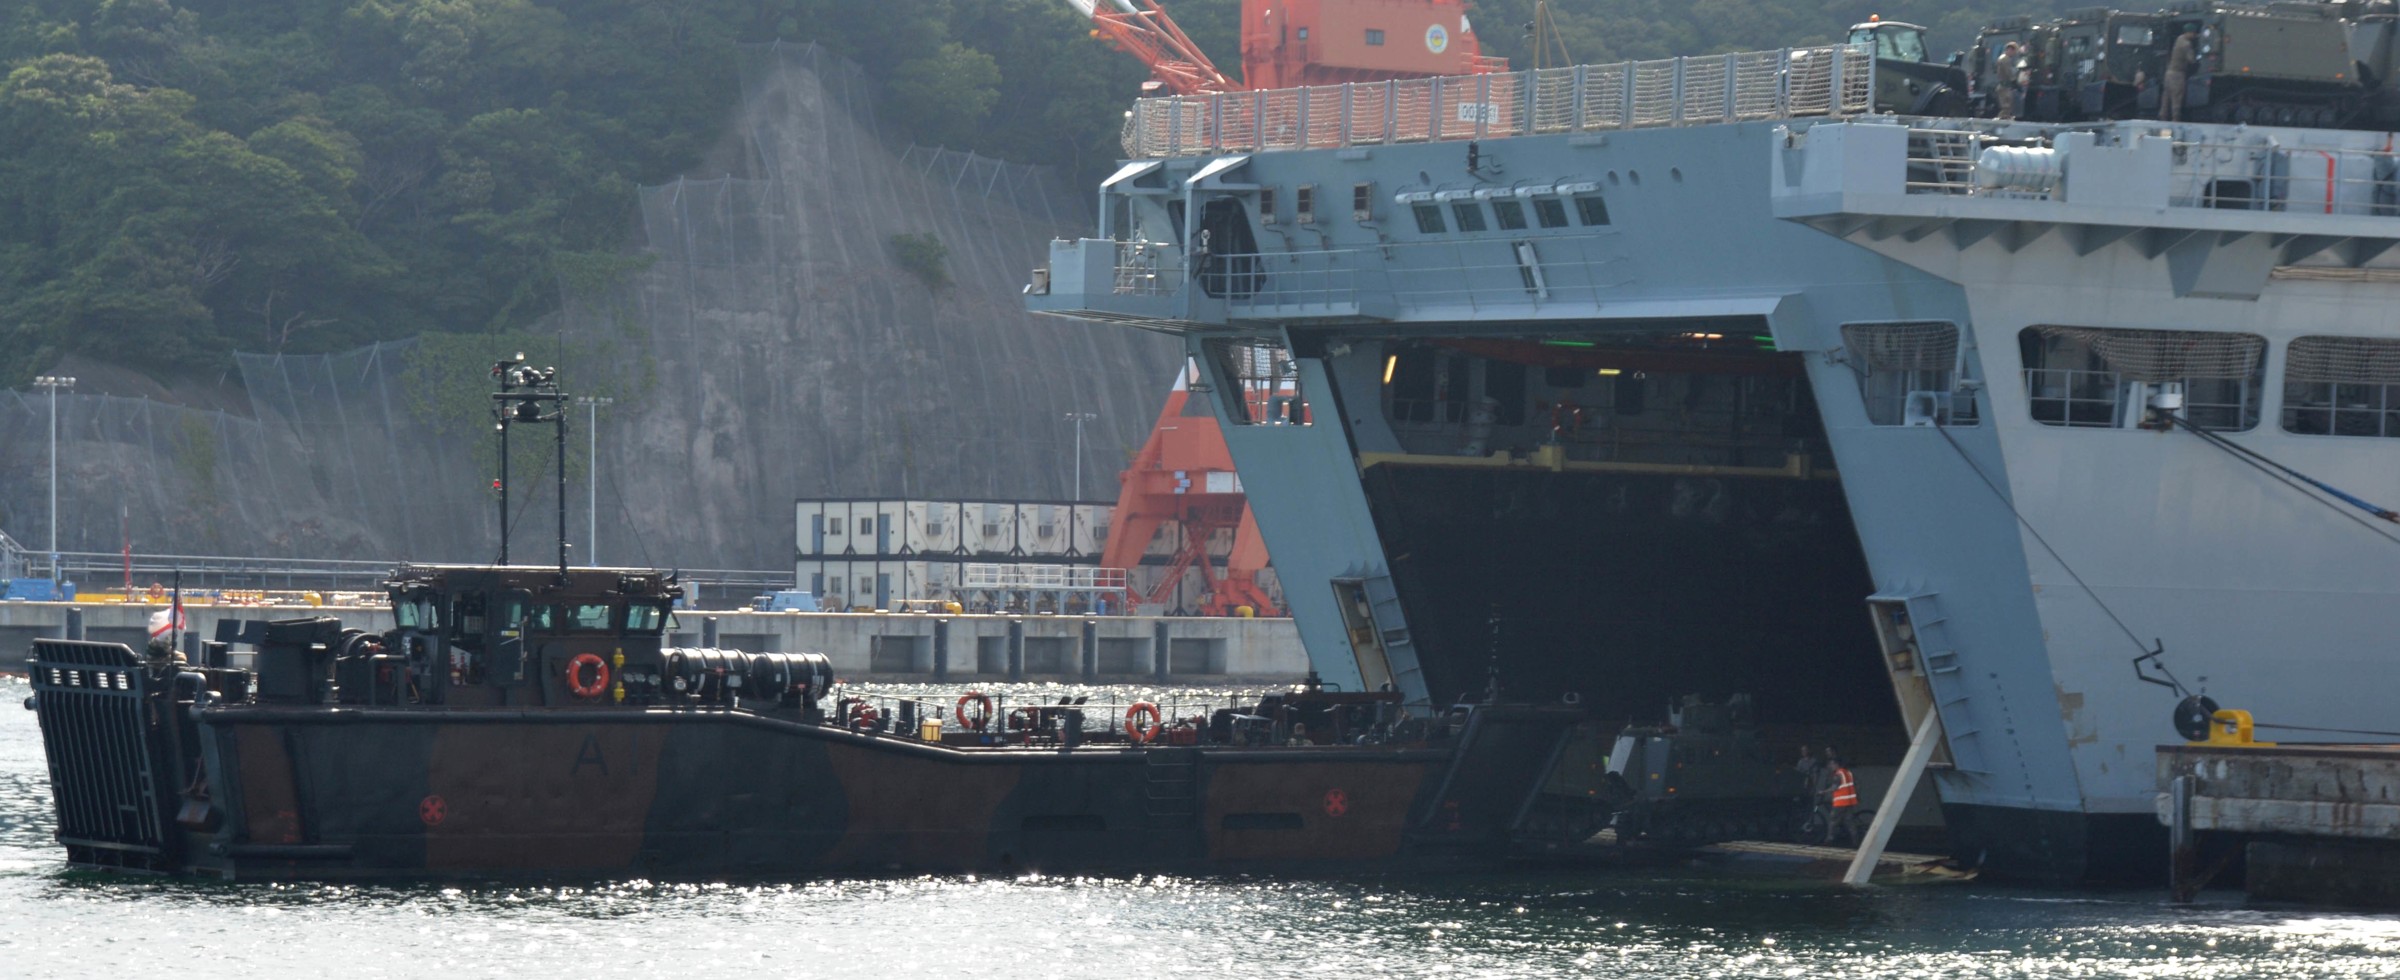 l14 hms albion amphibious transport dock assault ship landing platform lpd royal navy 81 lcu well deck